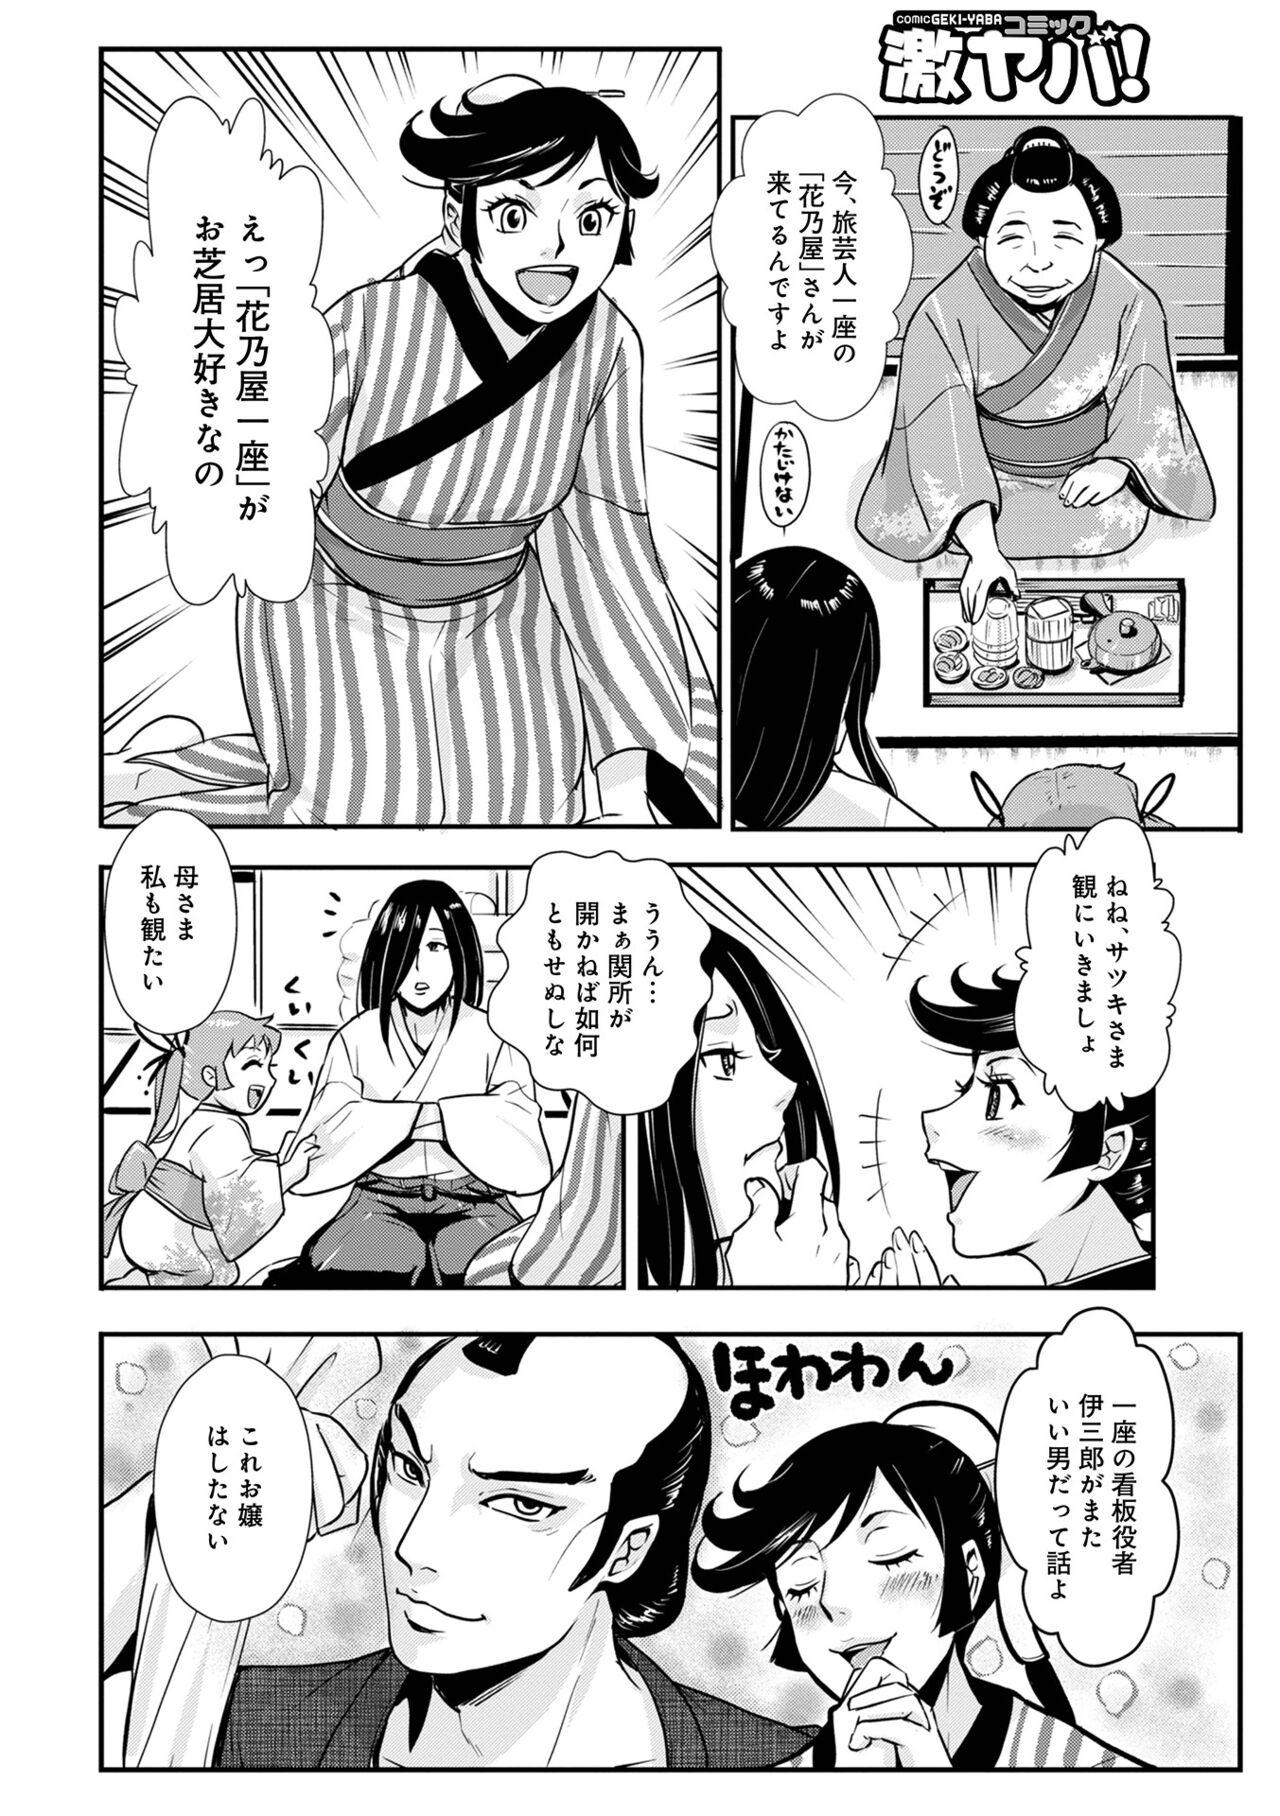 Zorra Harami samurai 14 Safadinha - Page 6